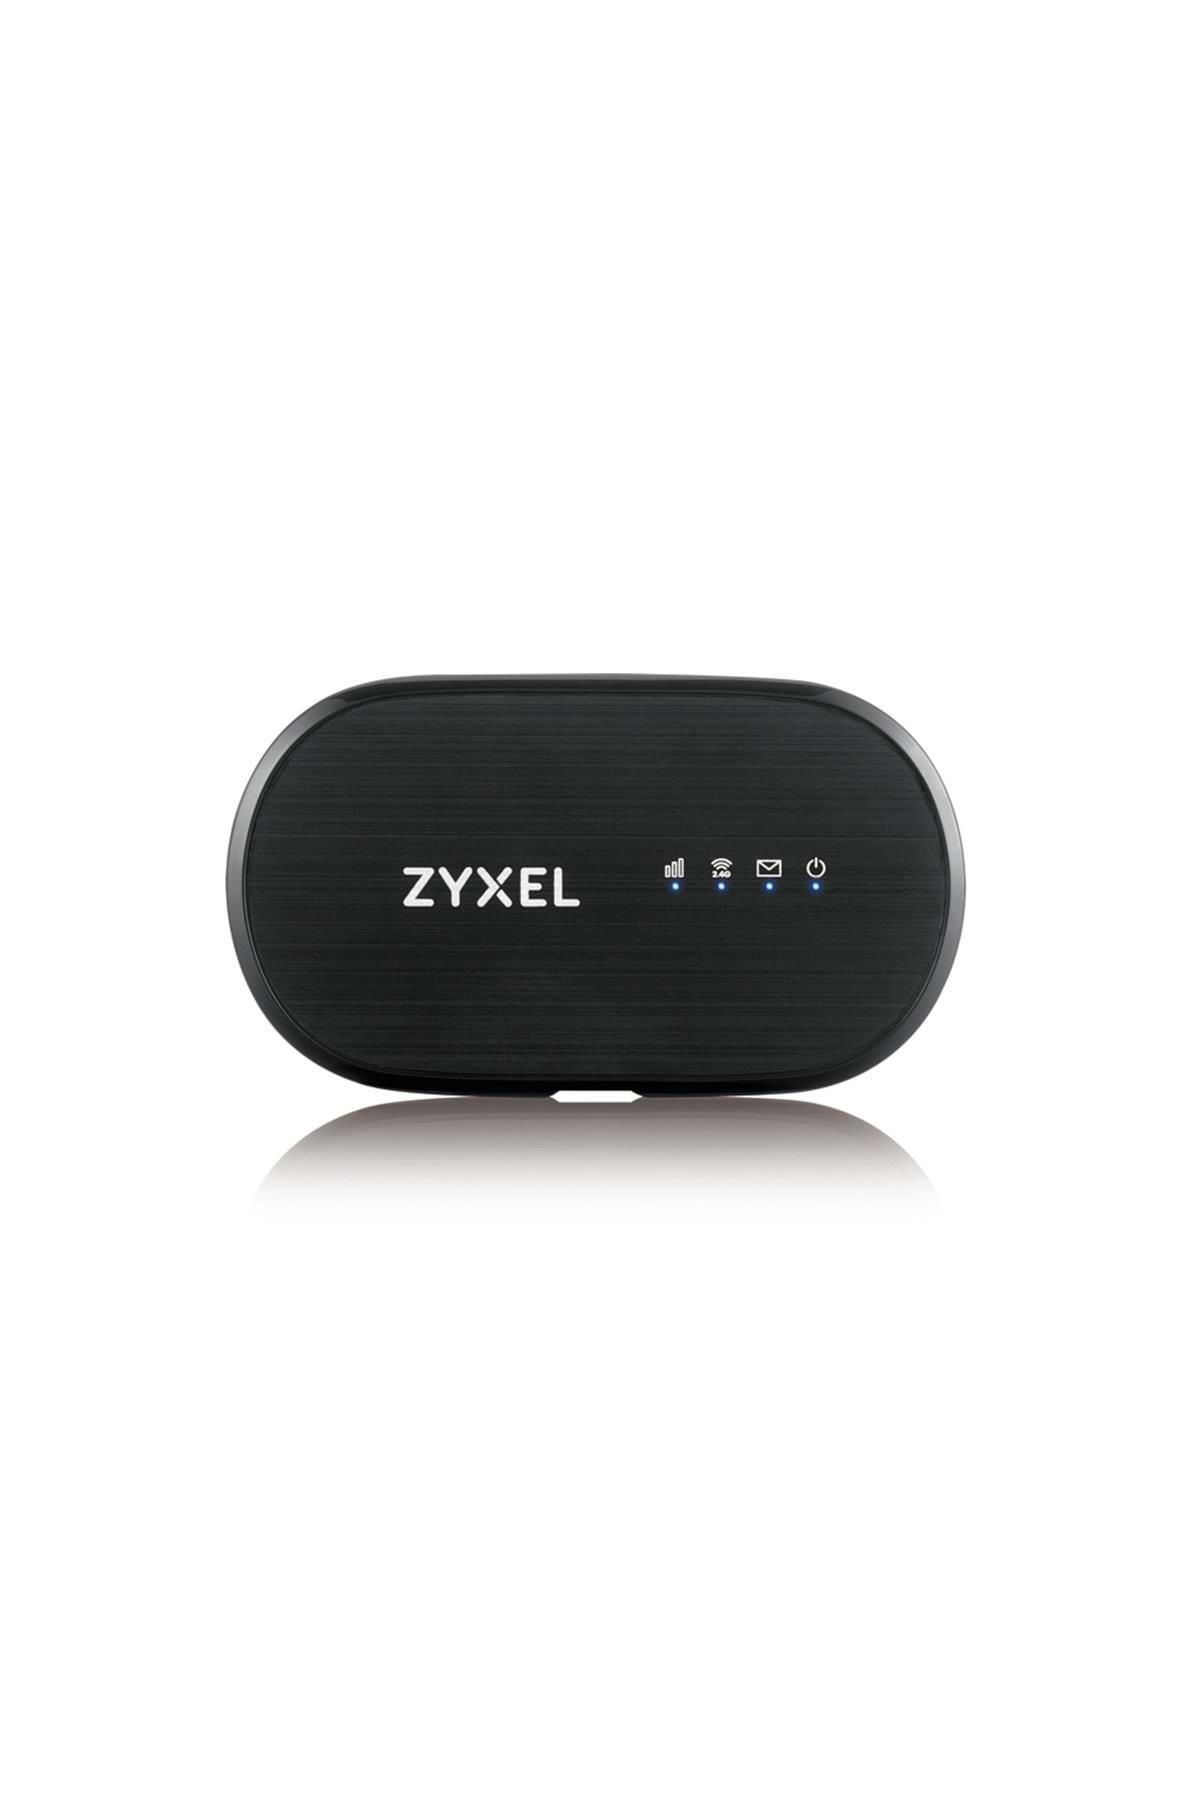 Zyxel Wah7601 Taşınabilir Router, 300 Mbps, 4g/lte